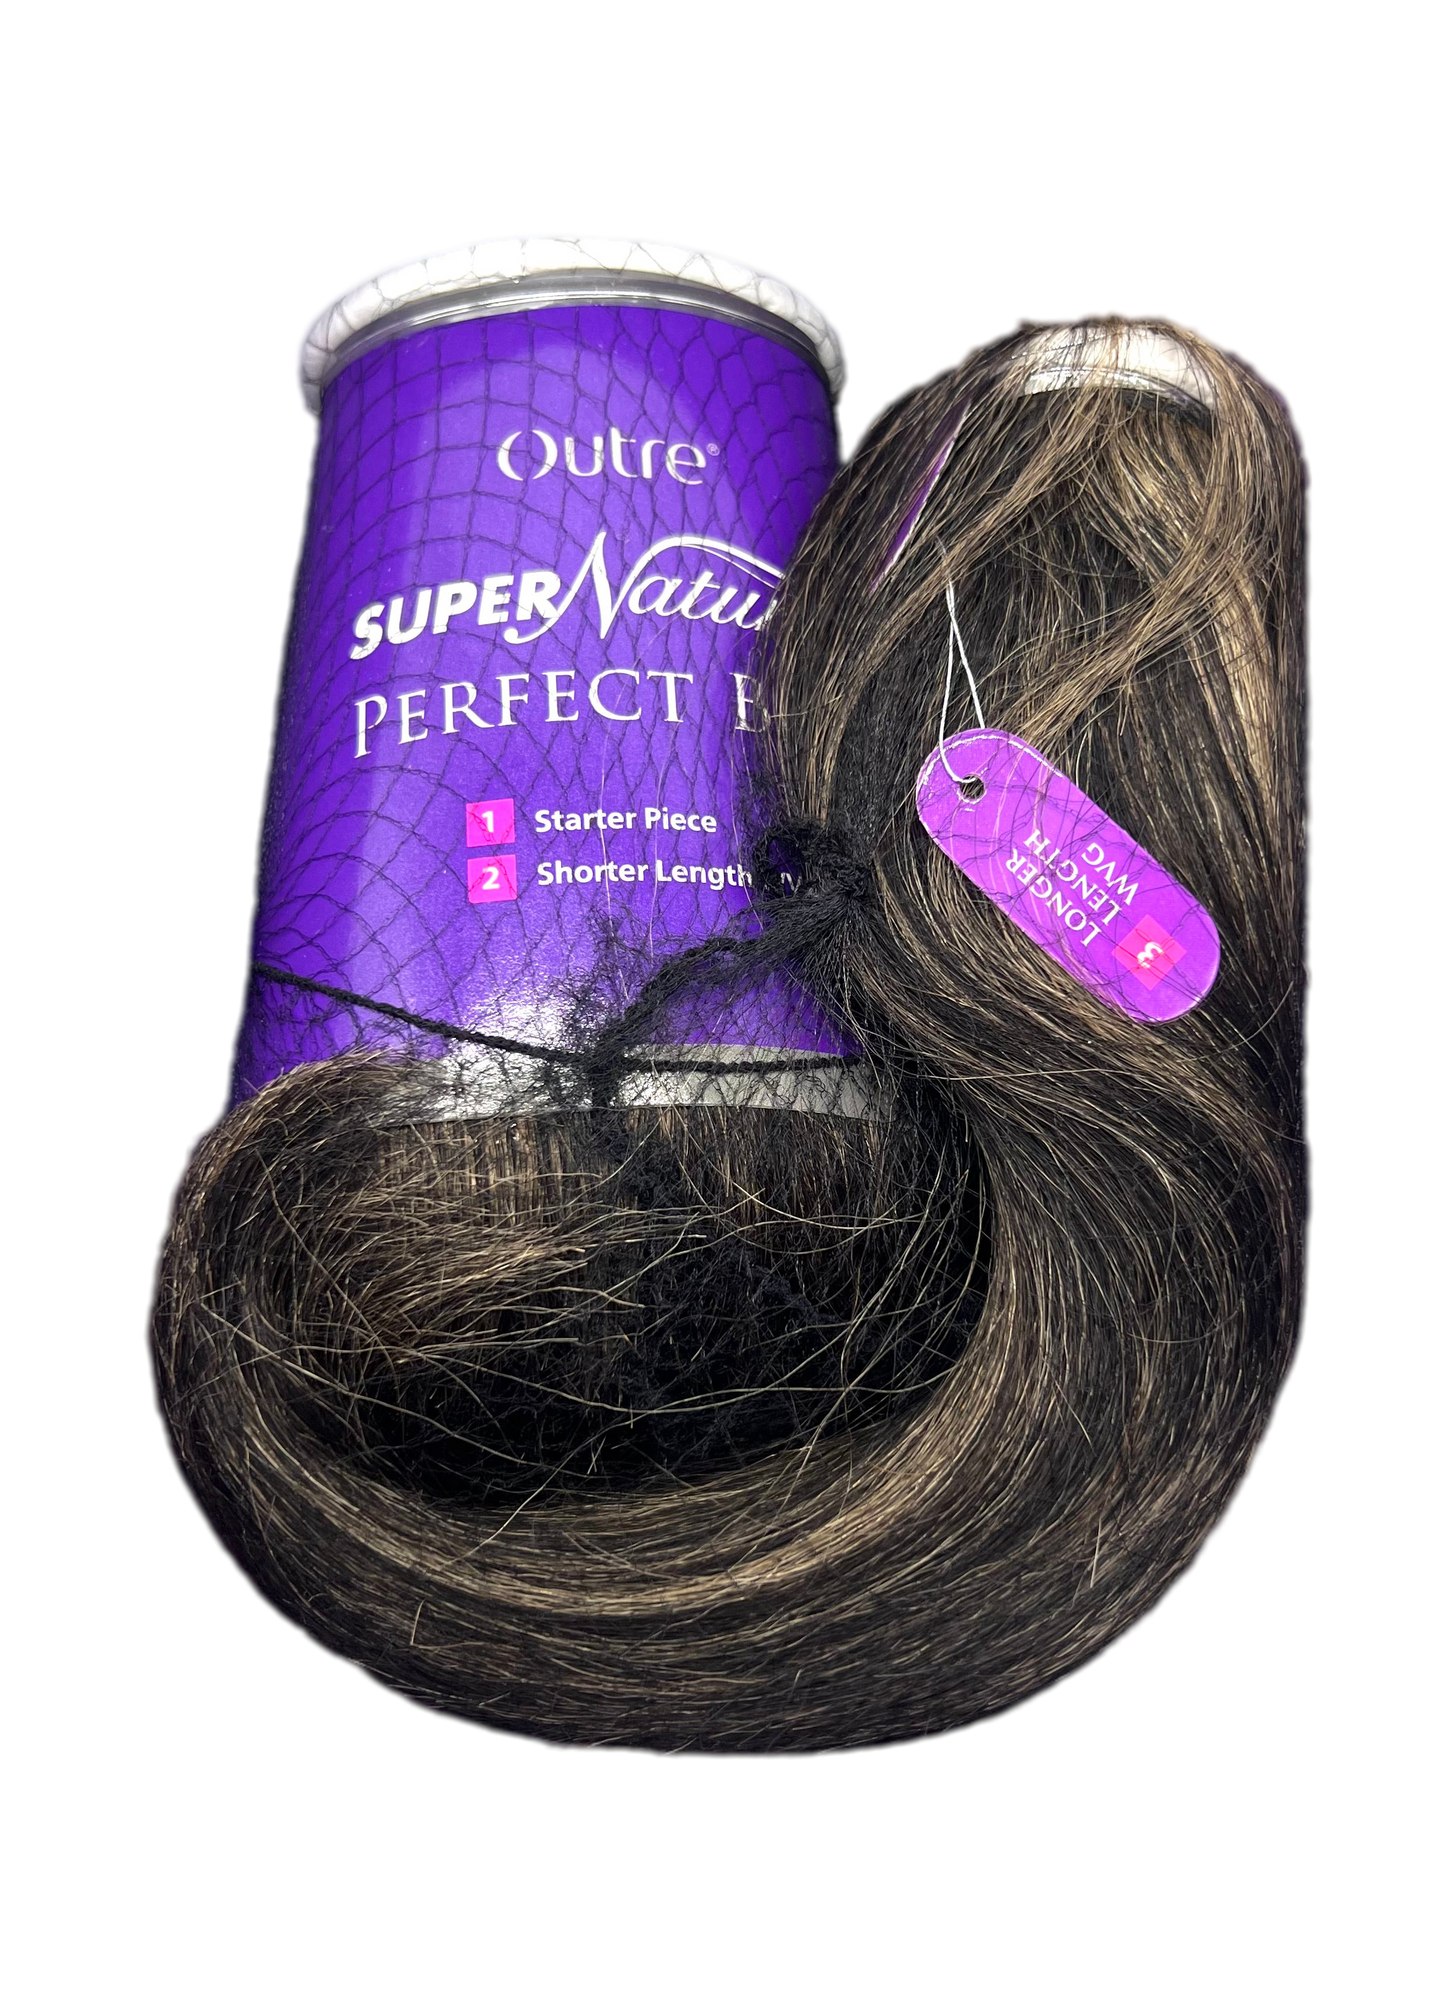 Outre Super Natural Perfect Bob 100%  Human Hair Weaving - VIP Extensions